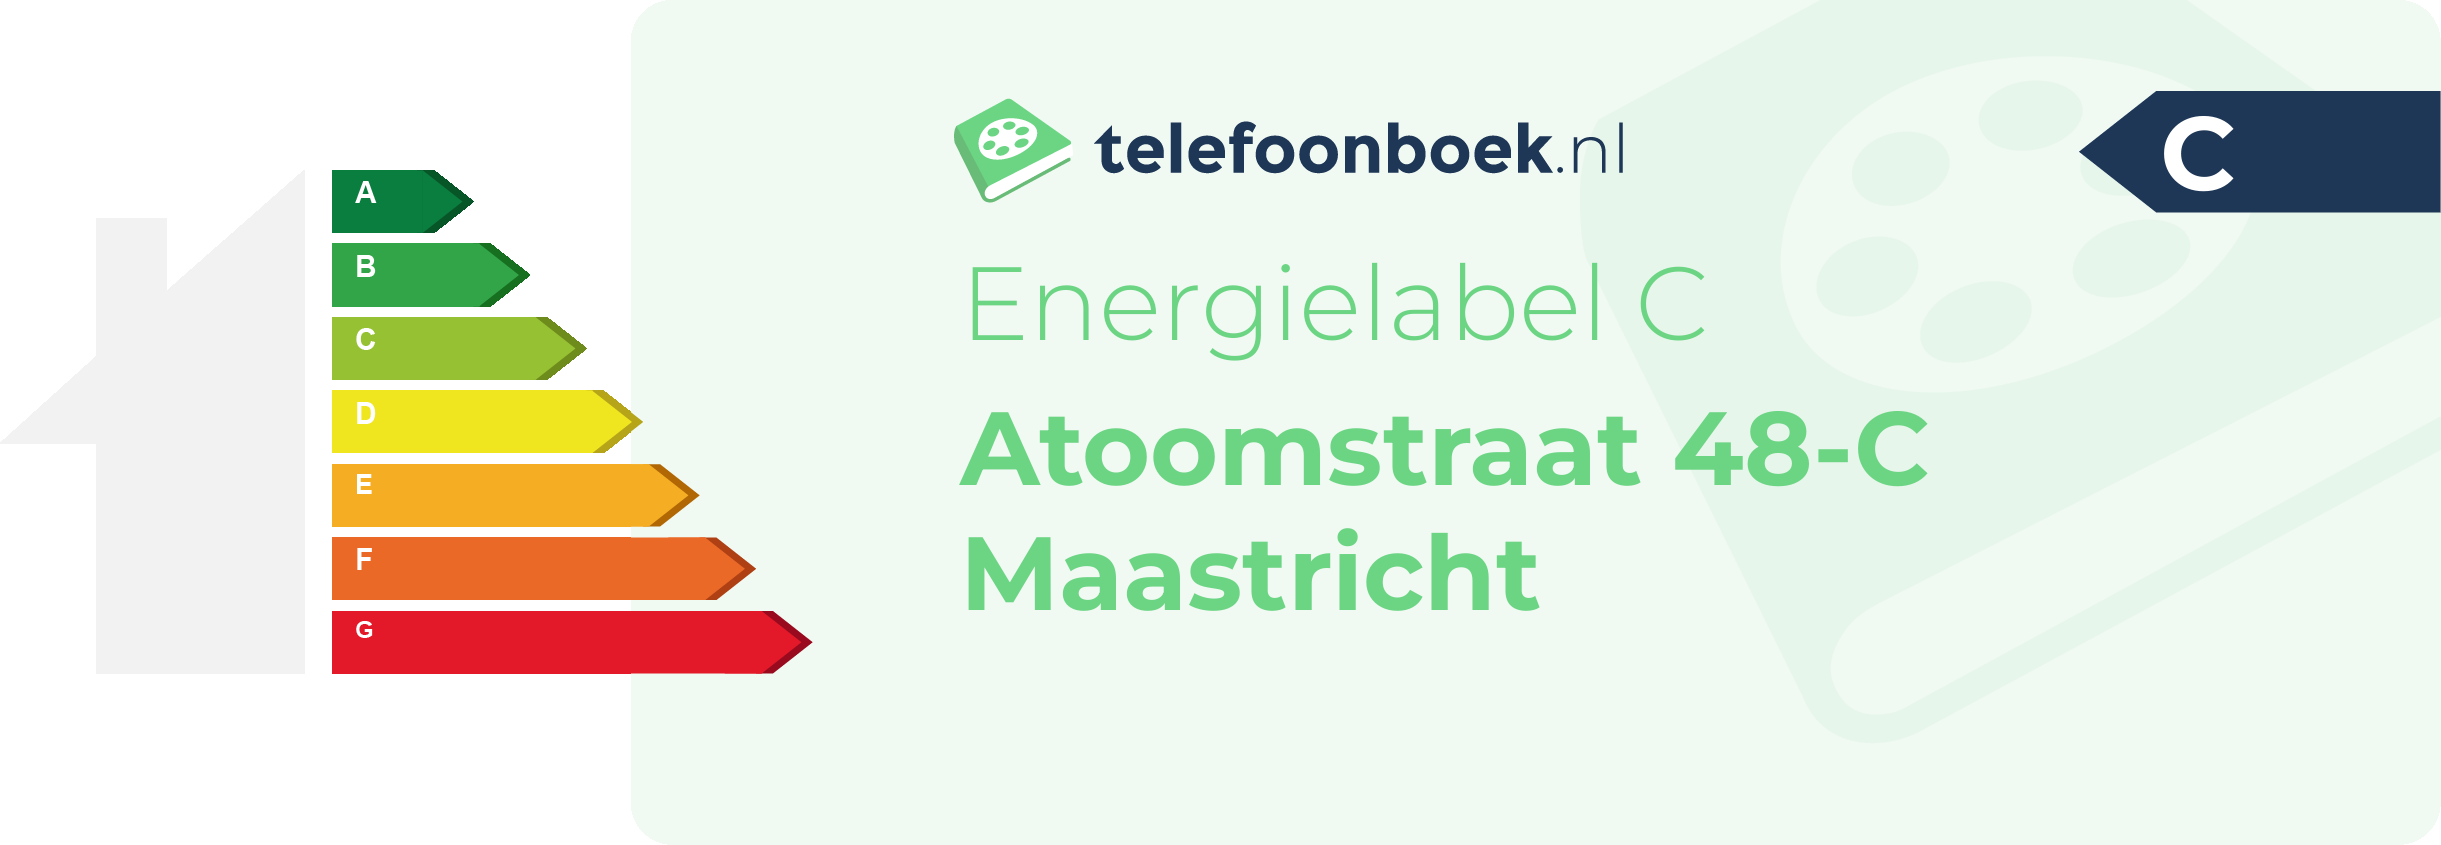 Energielabel Atoomstraat 48-C Maastricht